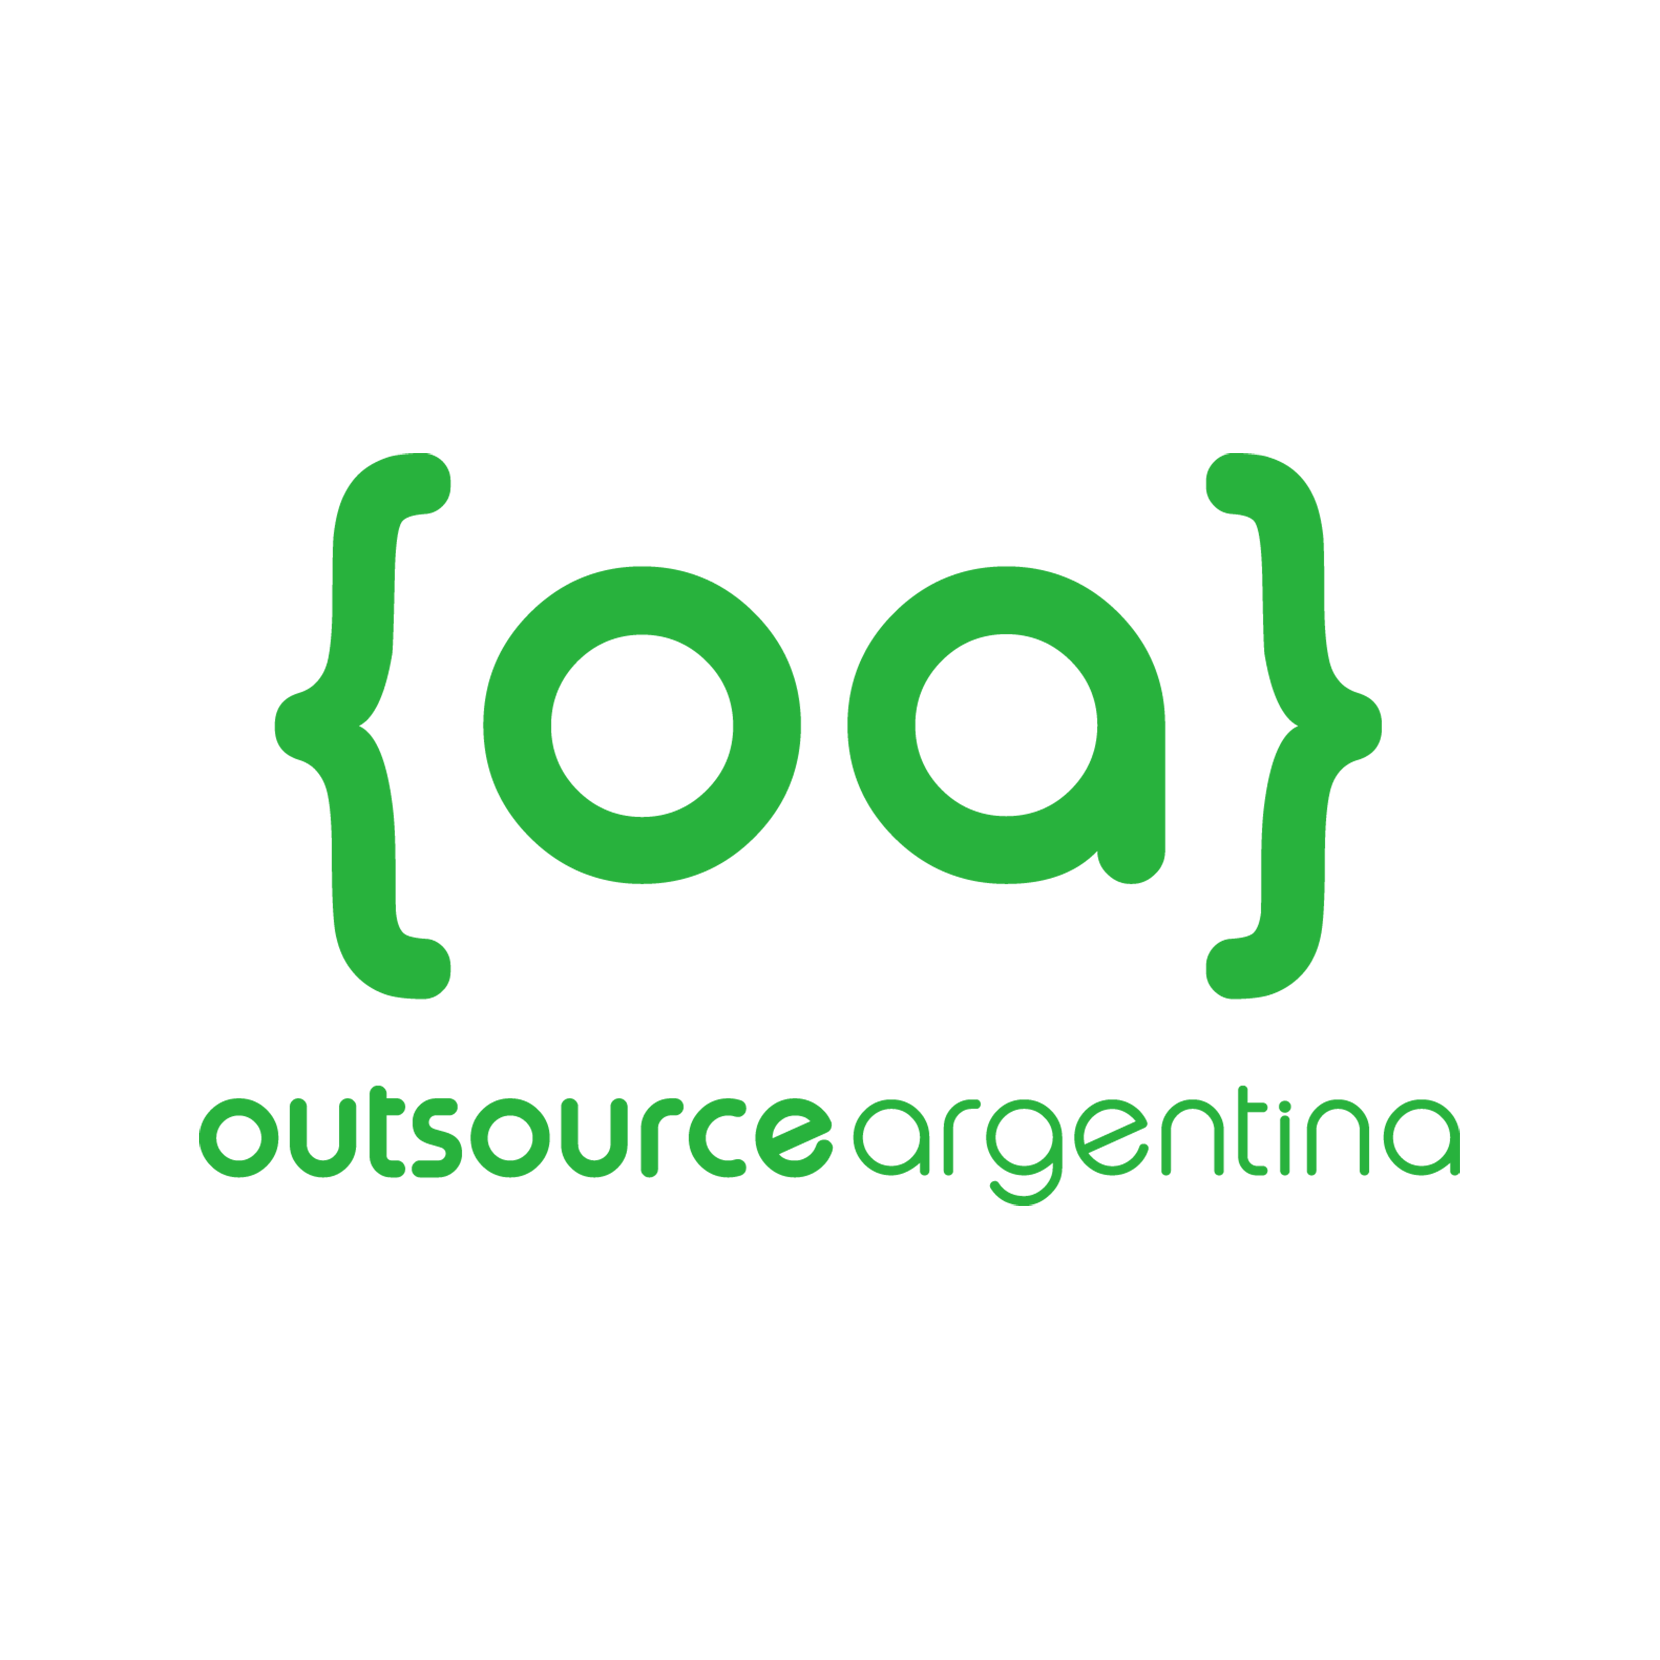 Outsource Argentina SAS